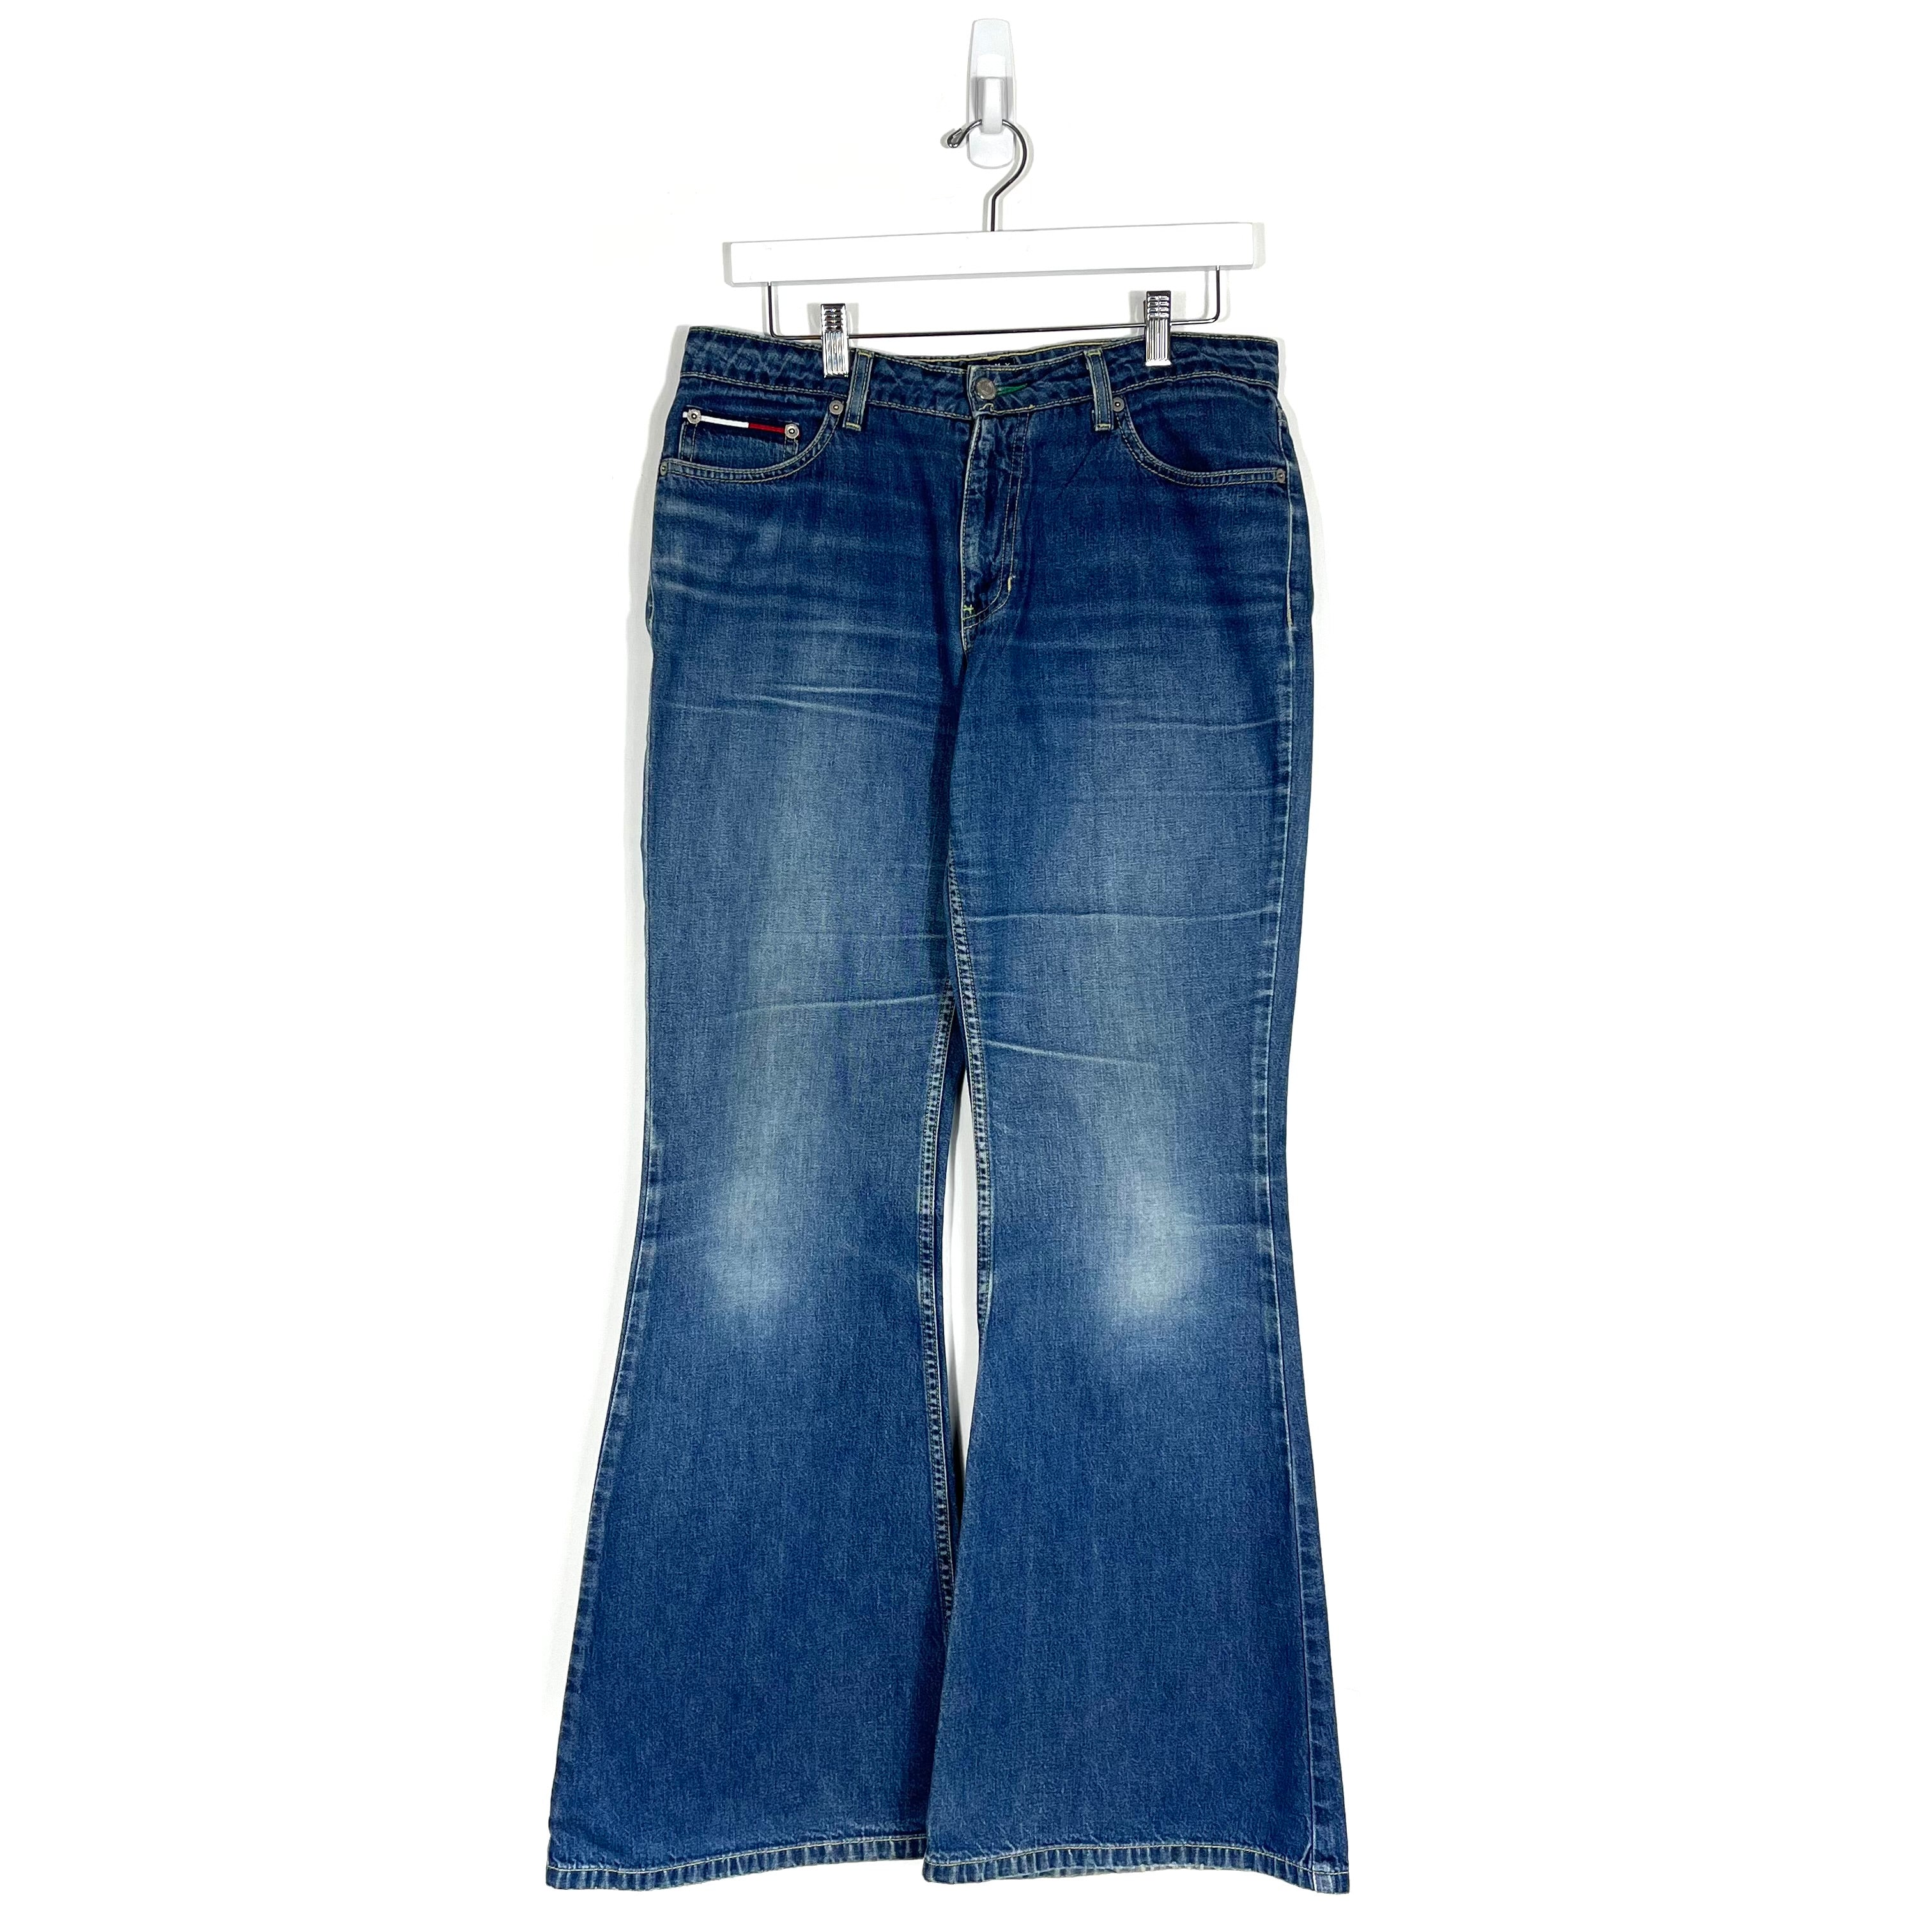 Vintage Tommy Hilfiger Jeans - Women's 32/32